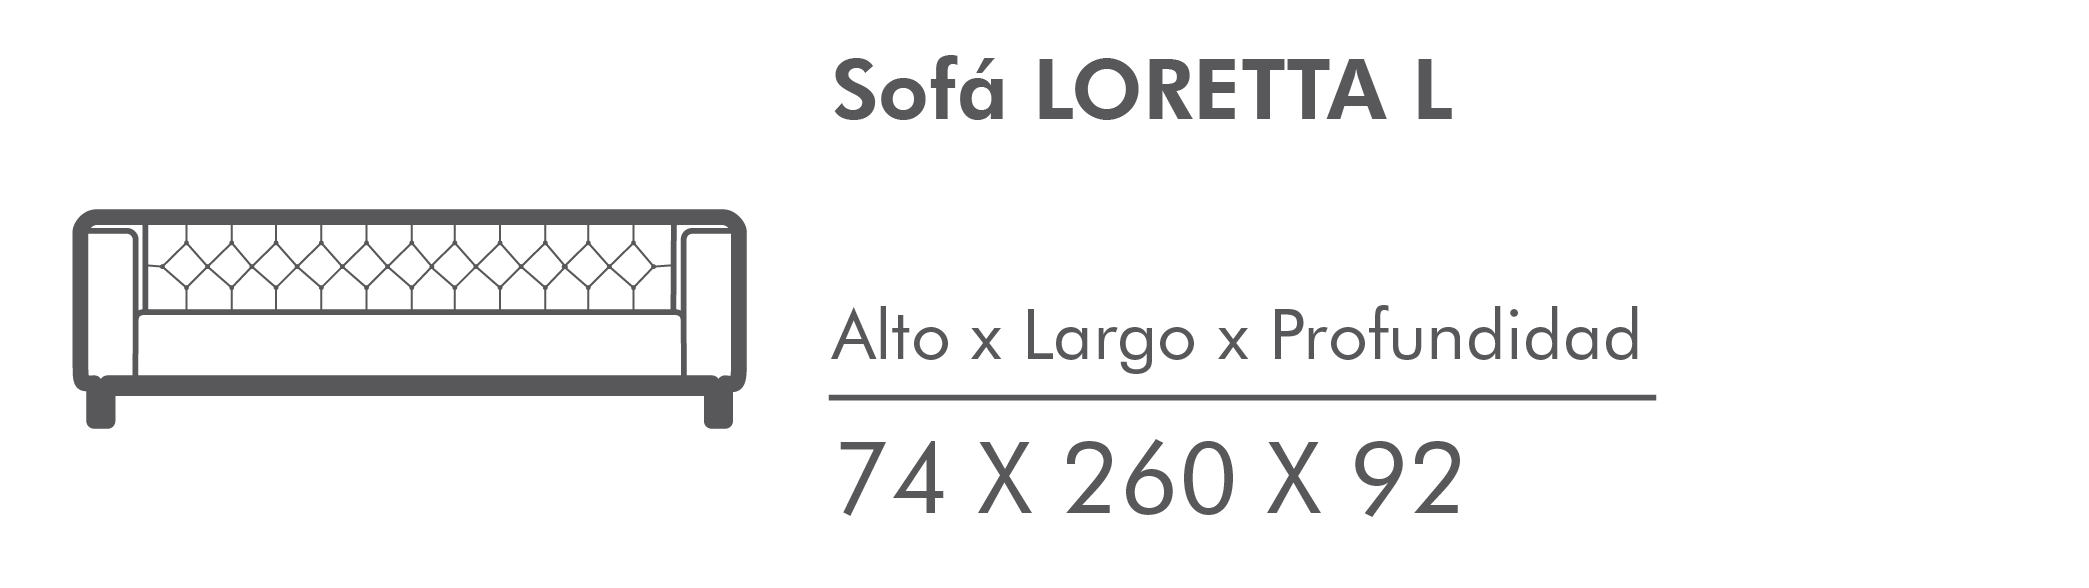 isometrico-sofa-lrg-loretta.png